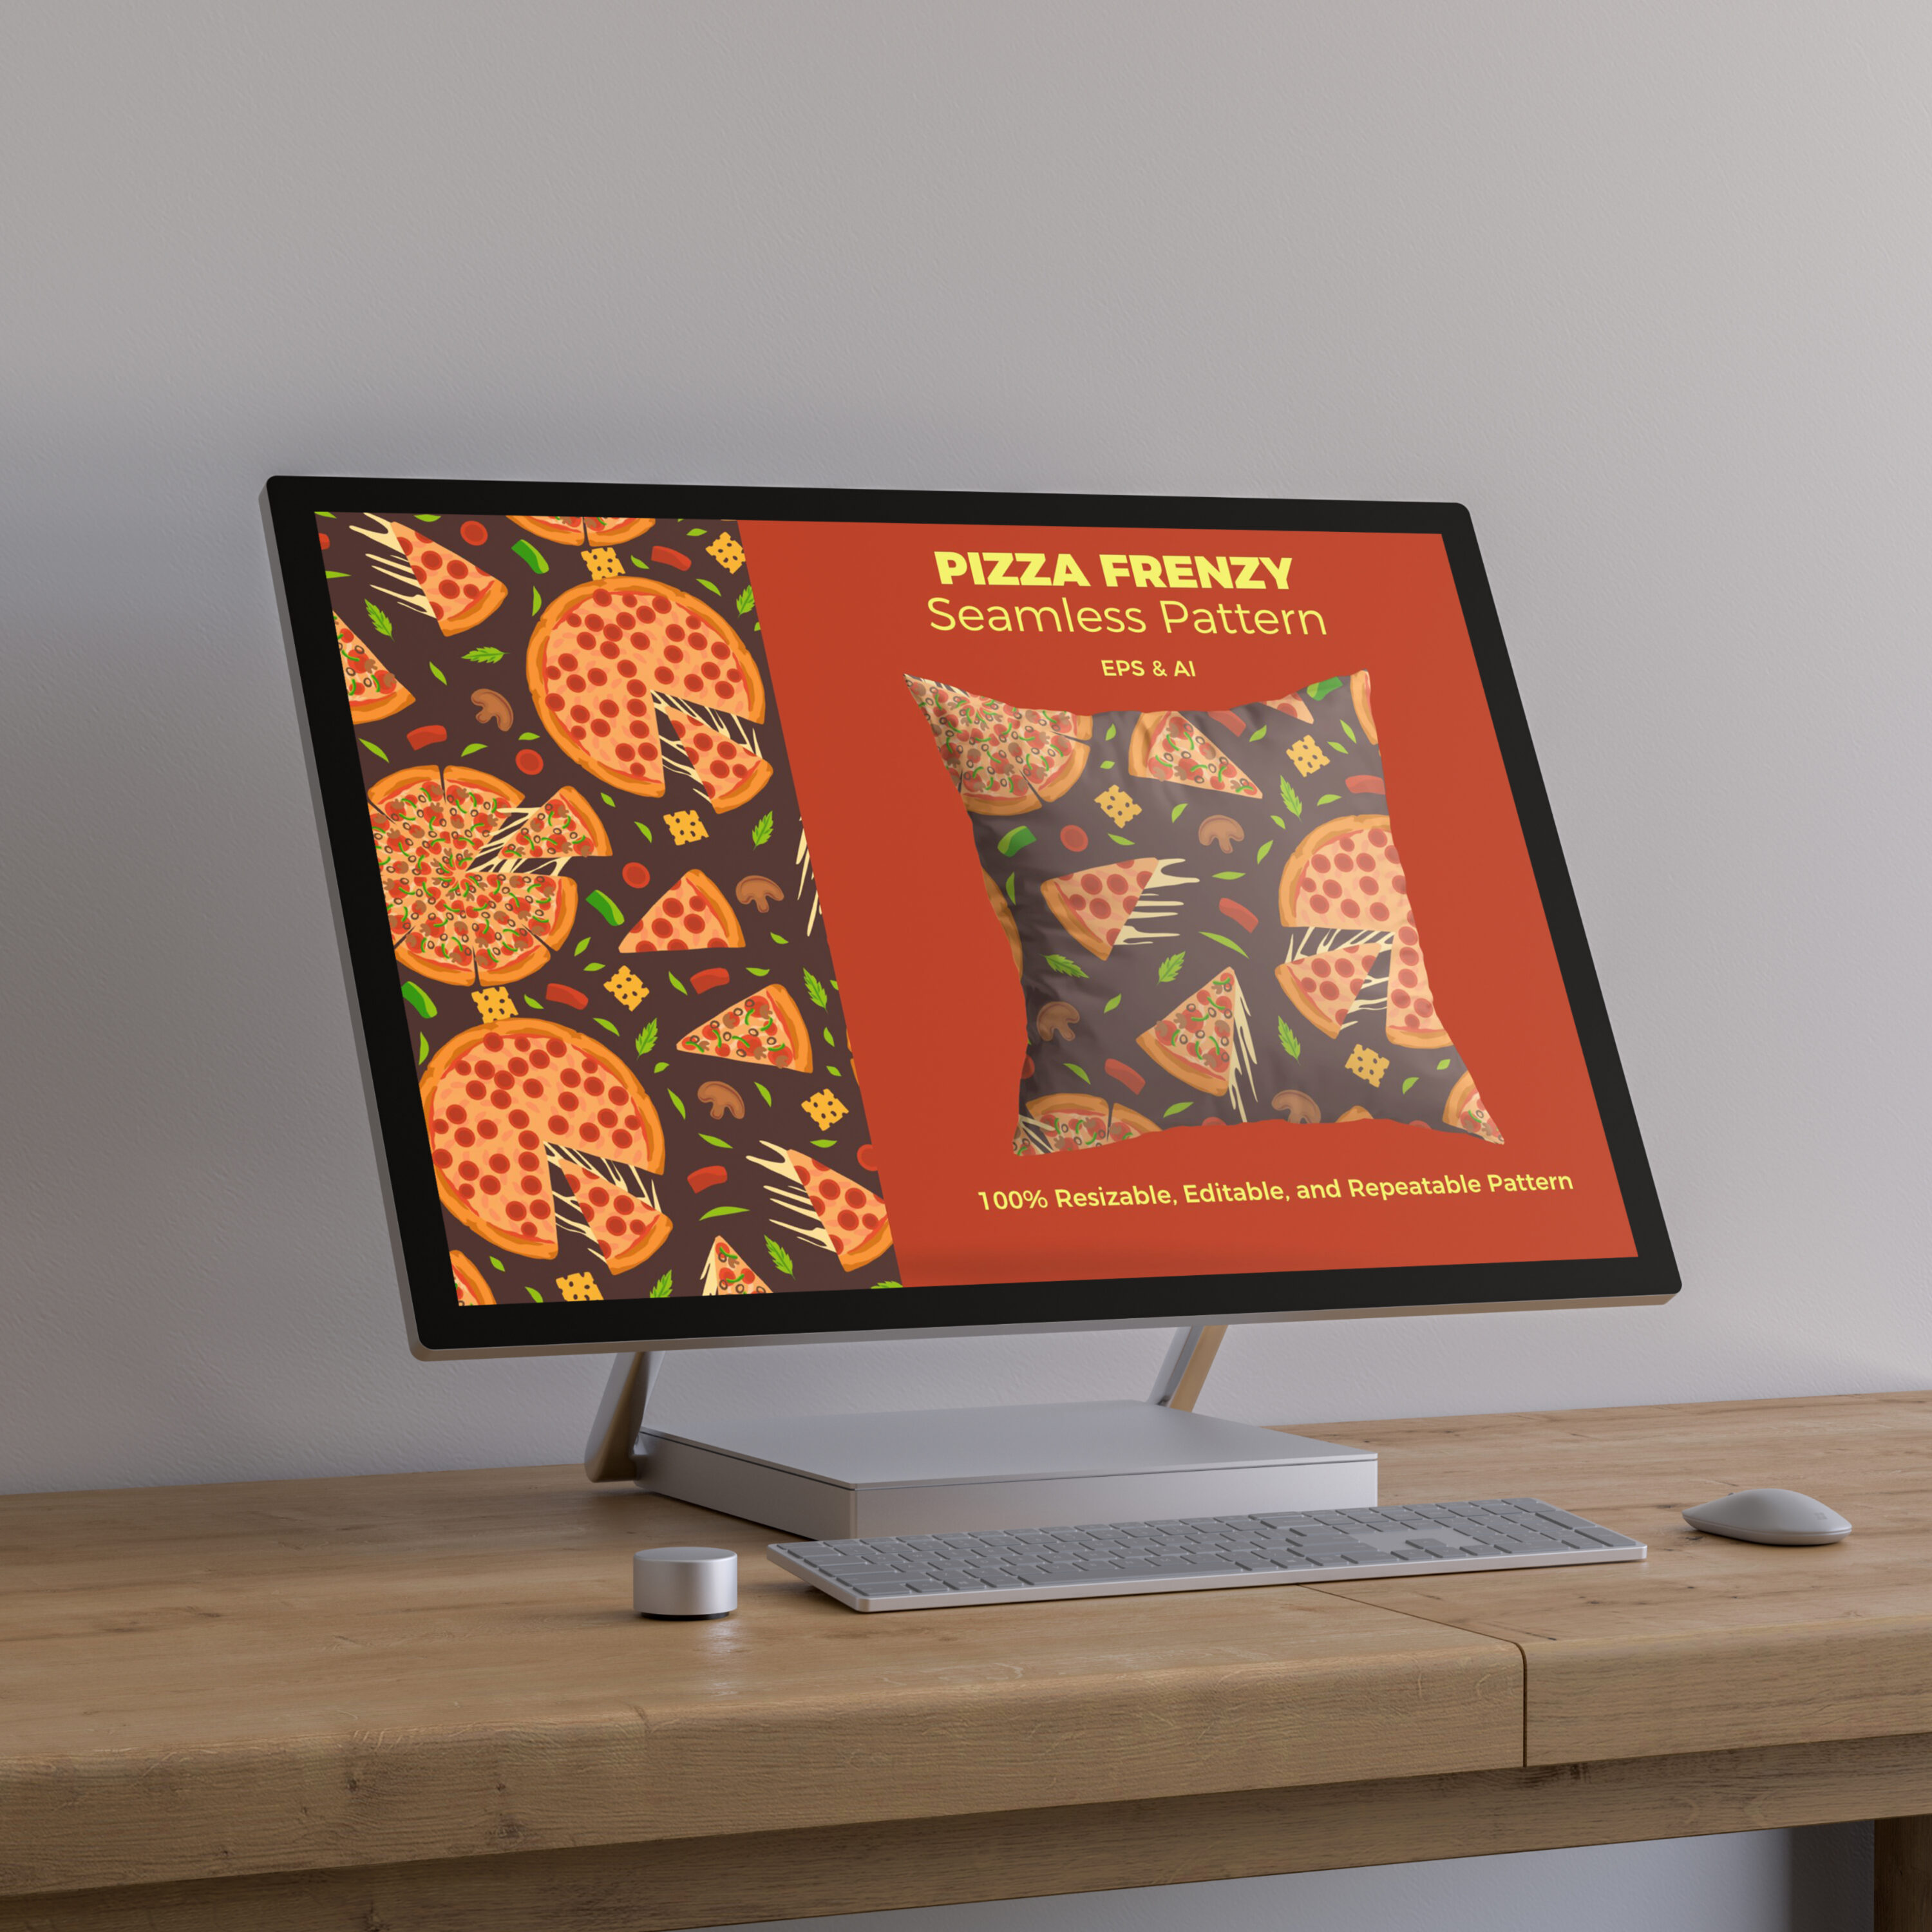 Prints of pizza frenzy pattern.